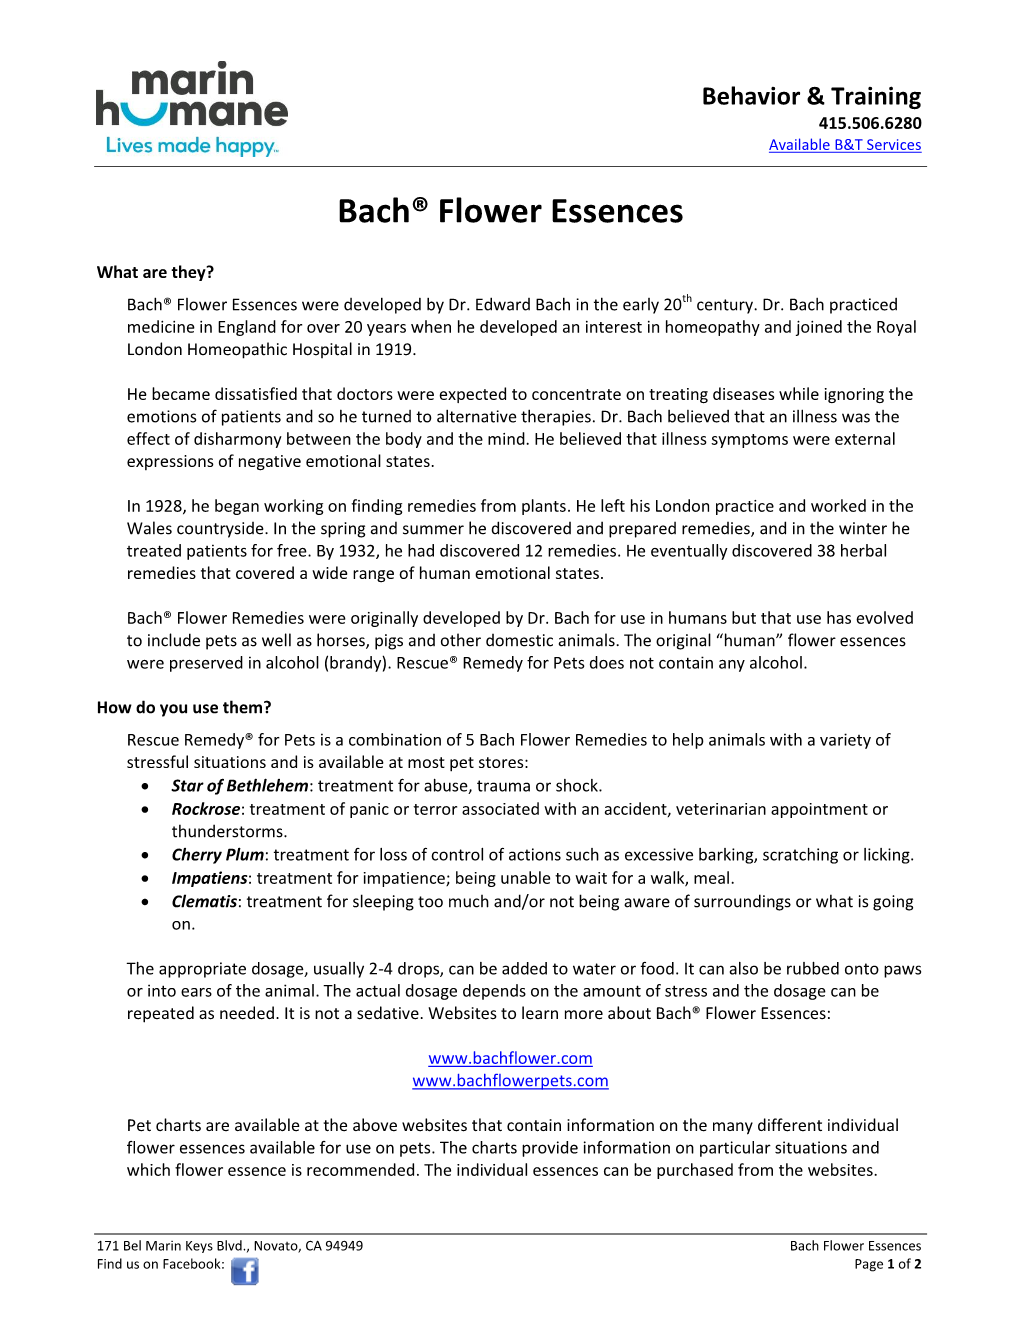 Bach Flower Essences Find Us on Facebook: Page 1 of 2